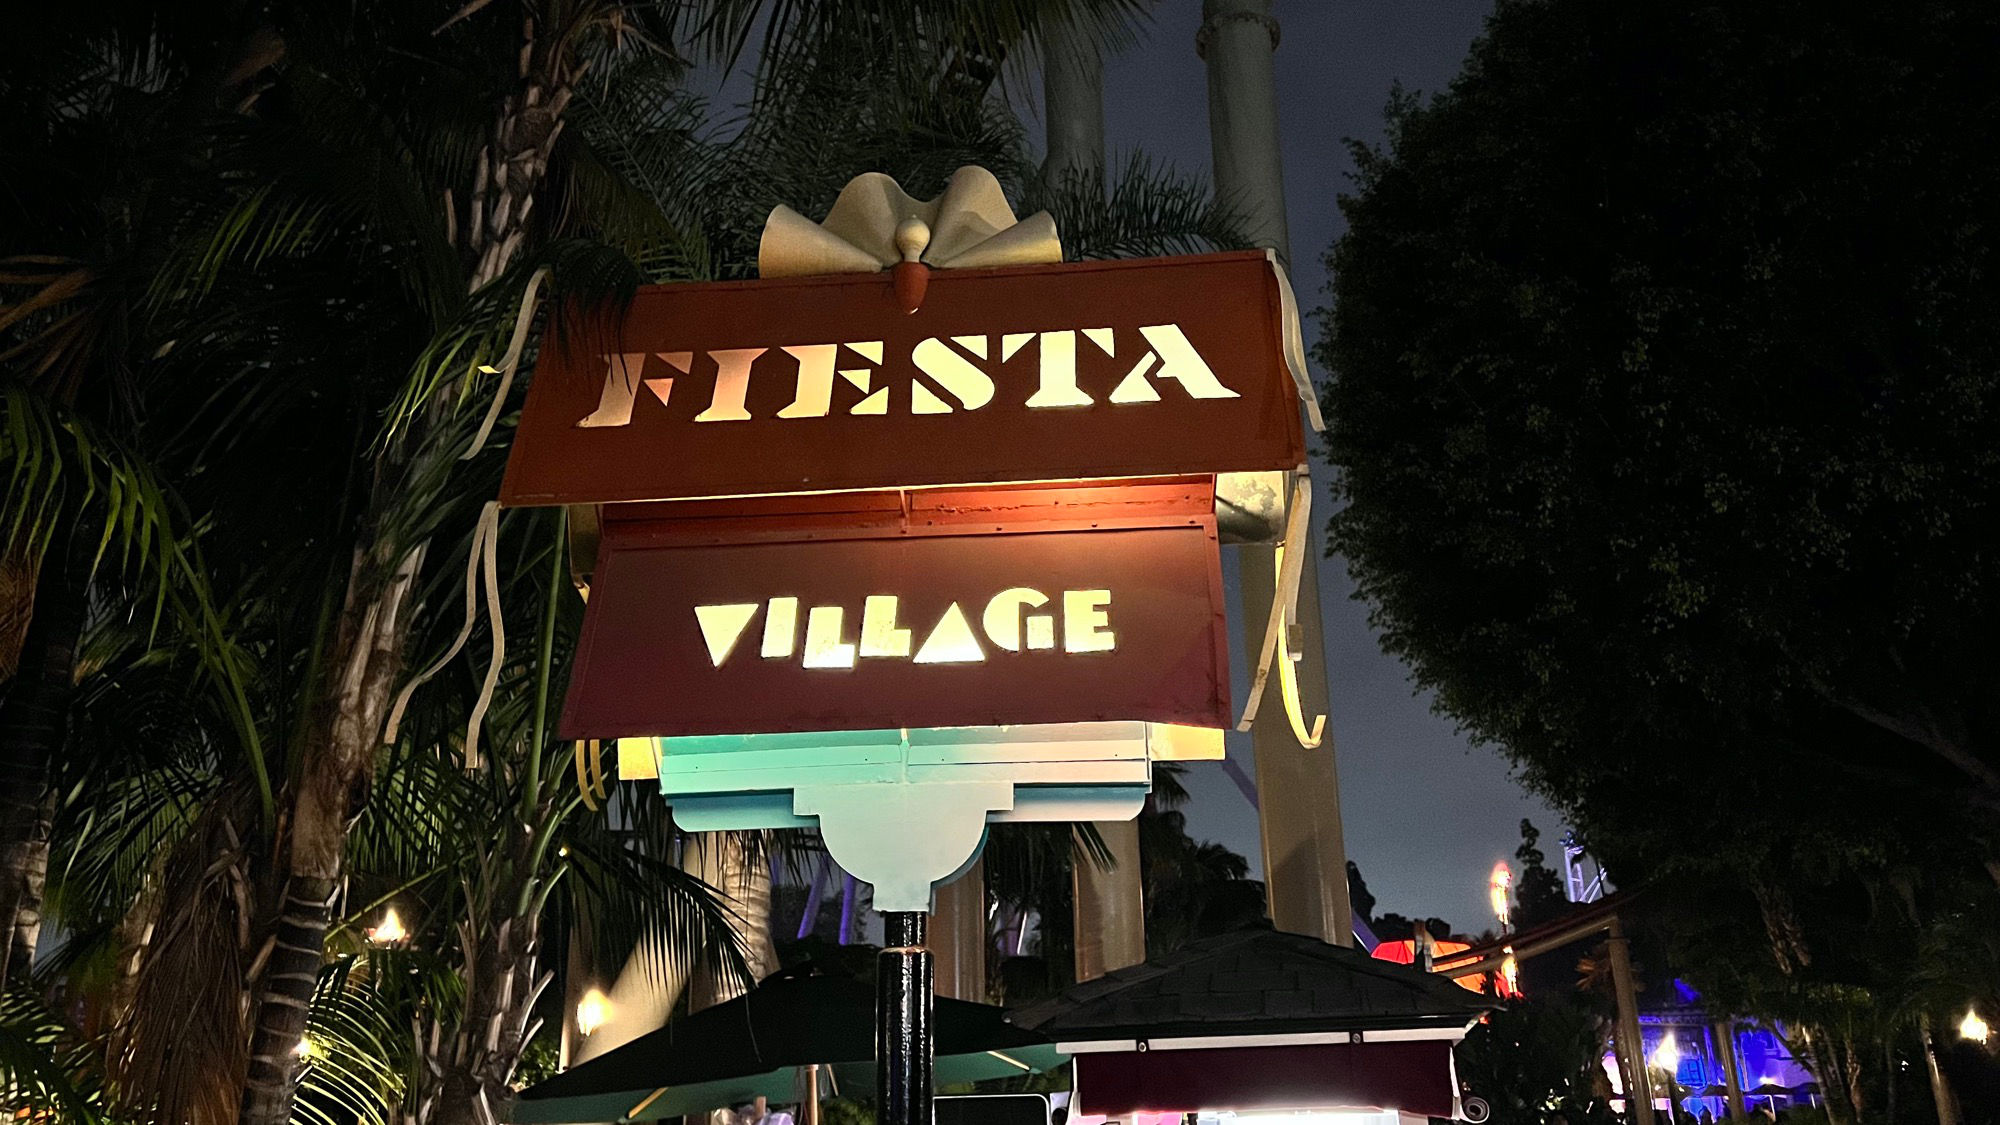 Knott's Berry Farm Fiesta Village Sign at Night